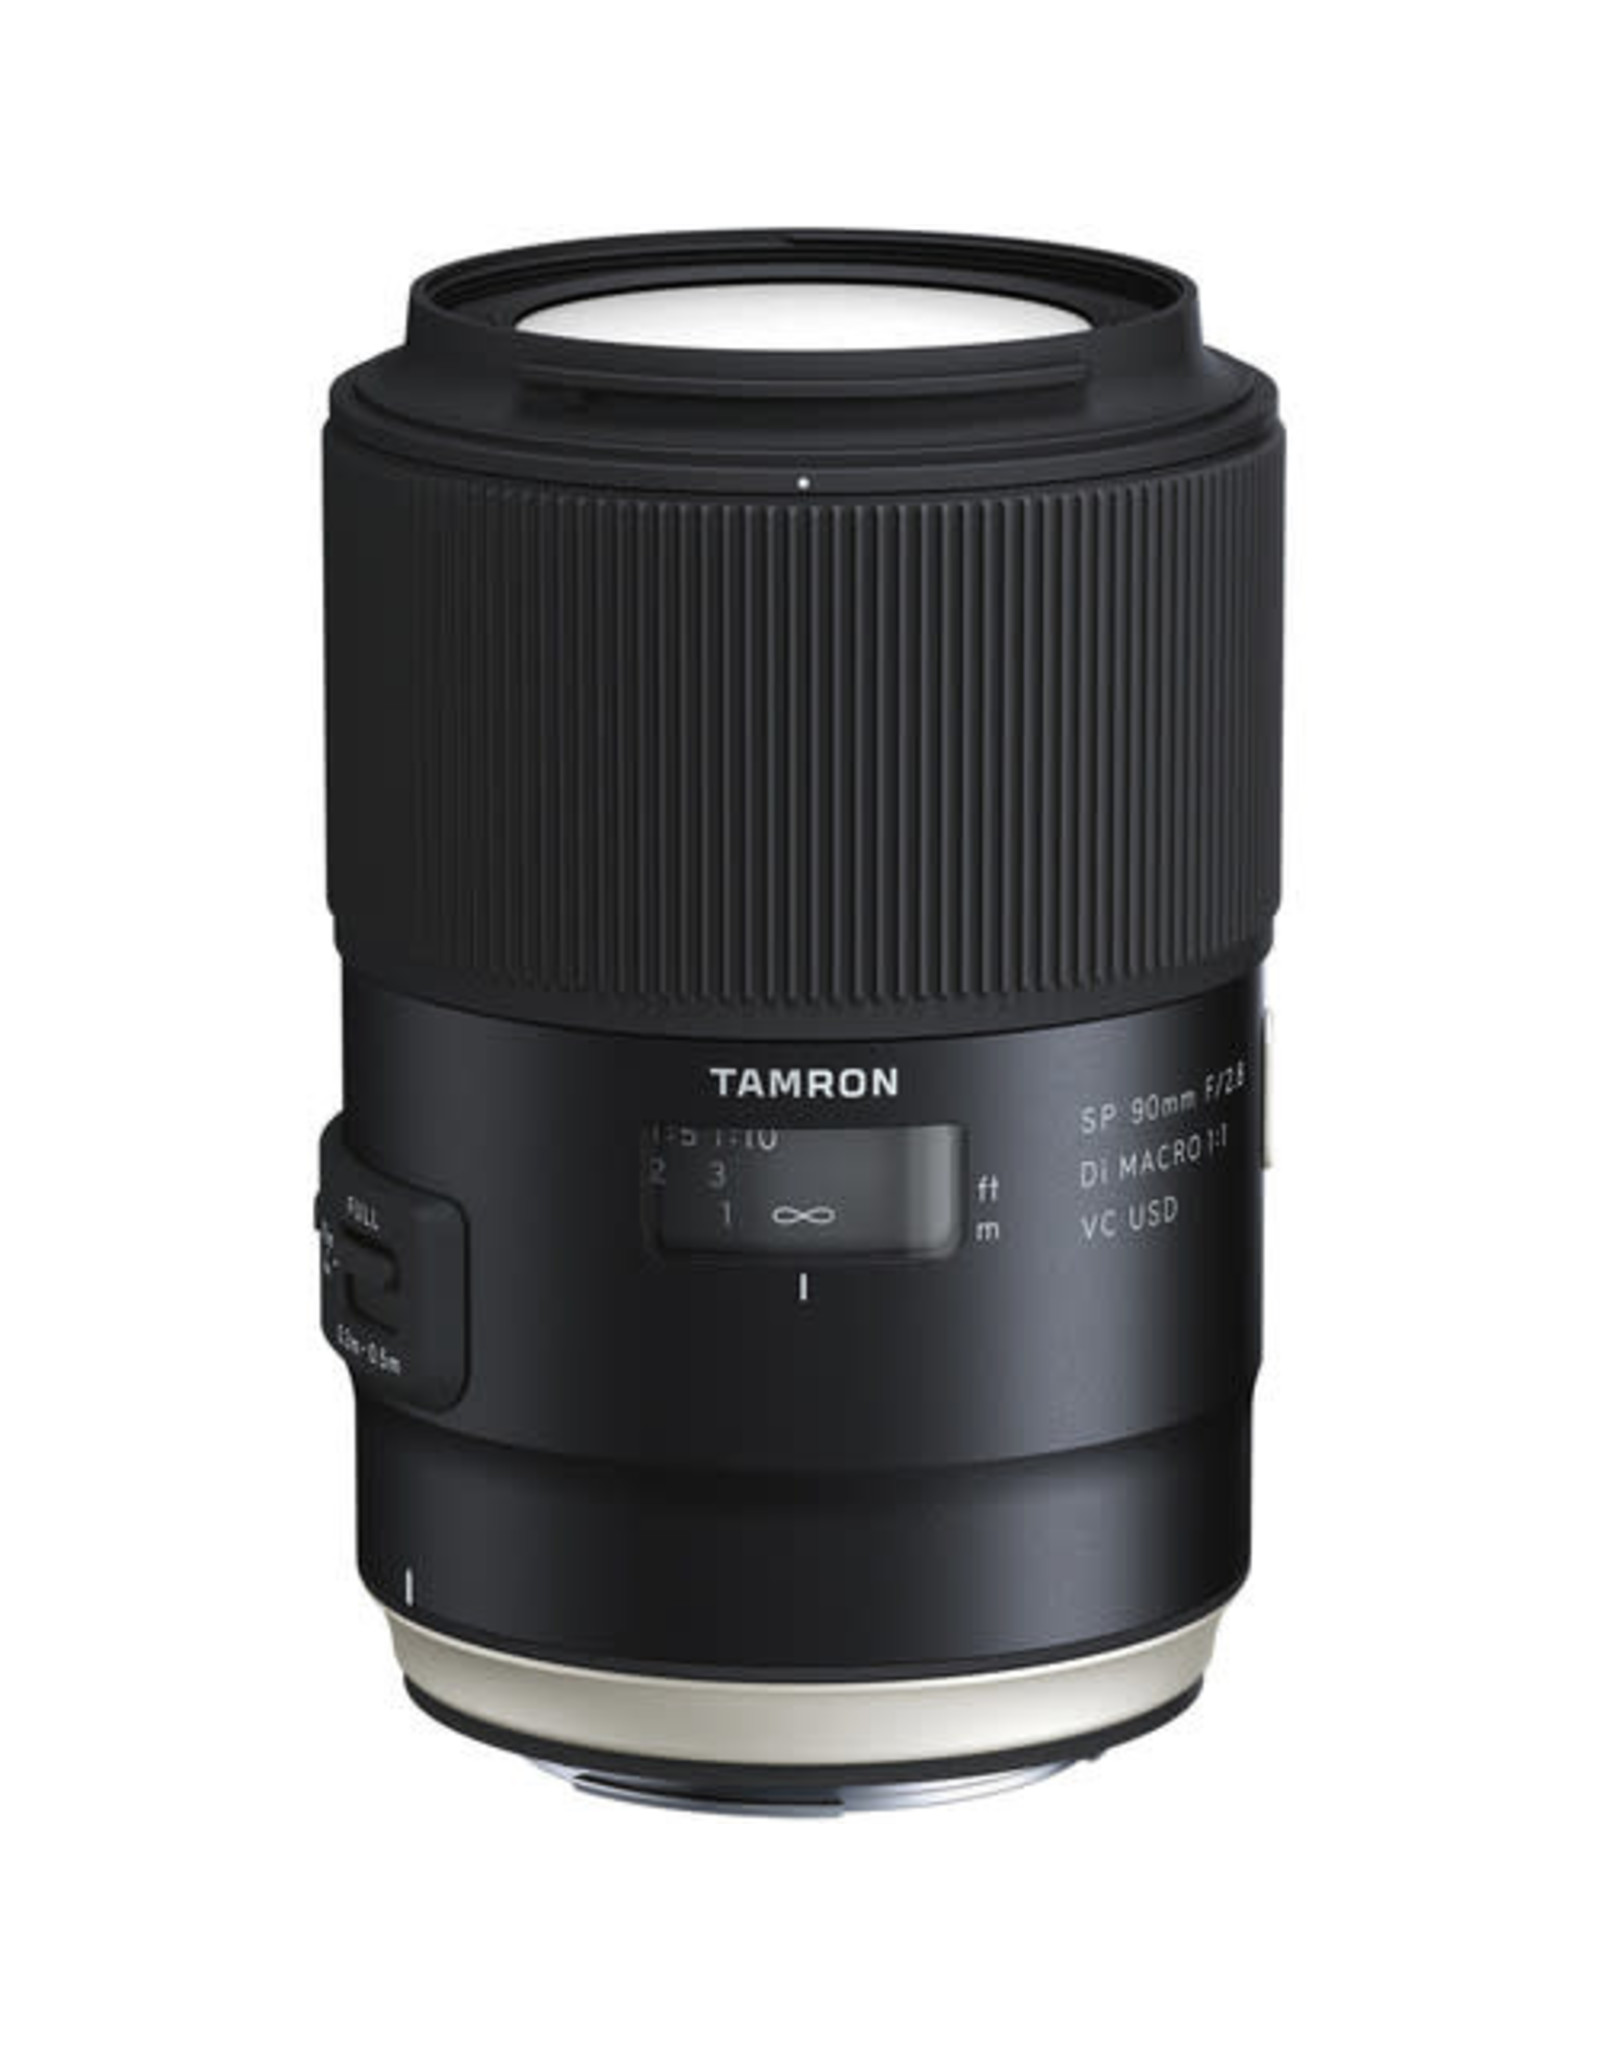 Tamron Tamron SP 90mm f2.8 Di VC USD 1:1 Macro w/hood (Specify Mount)